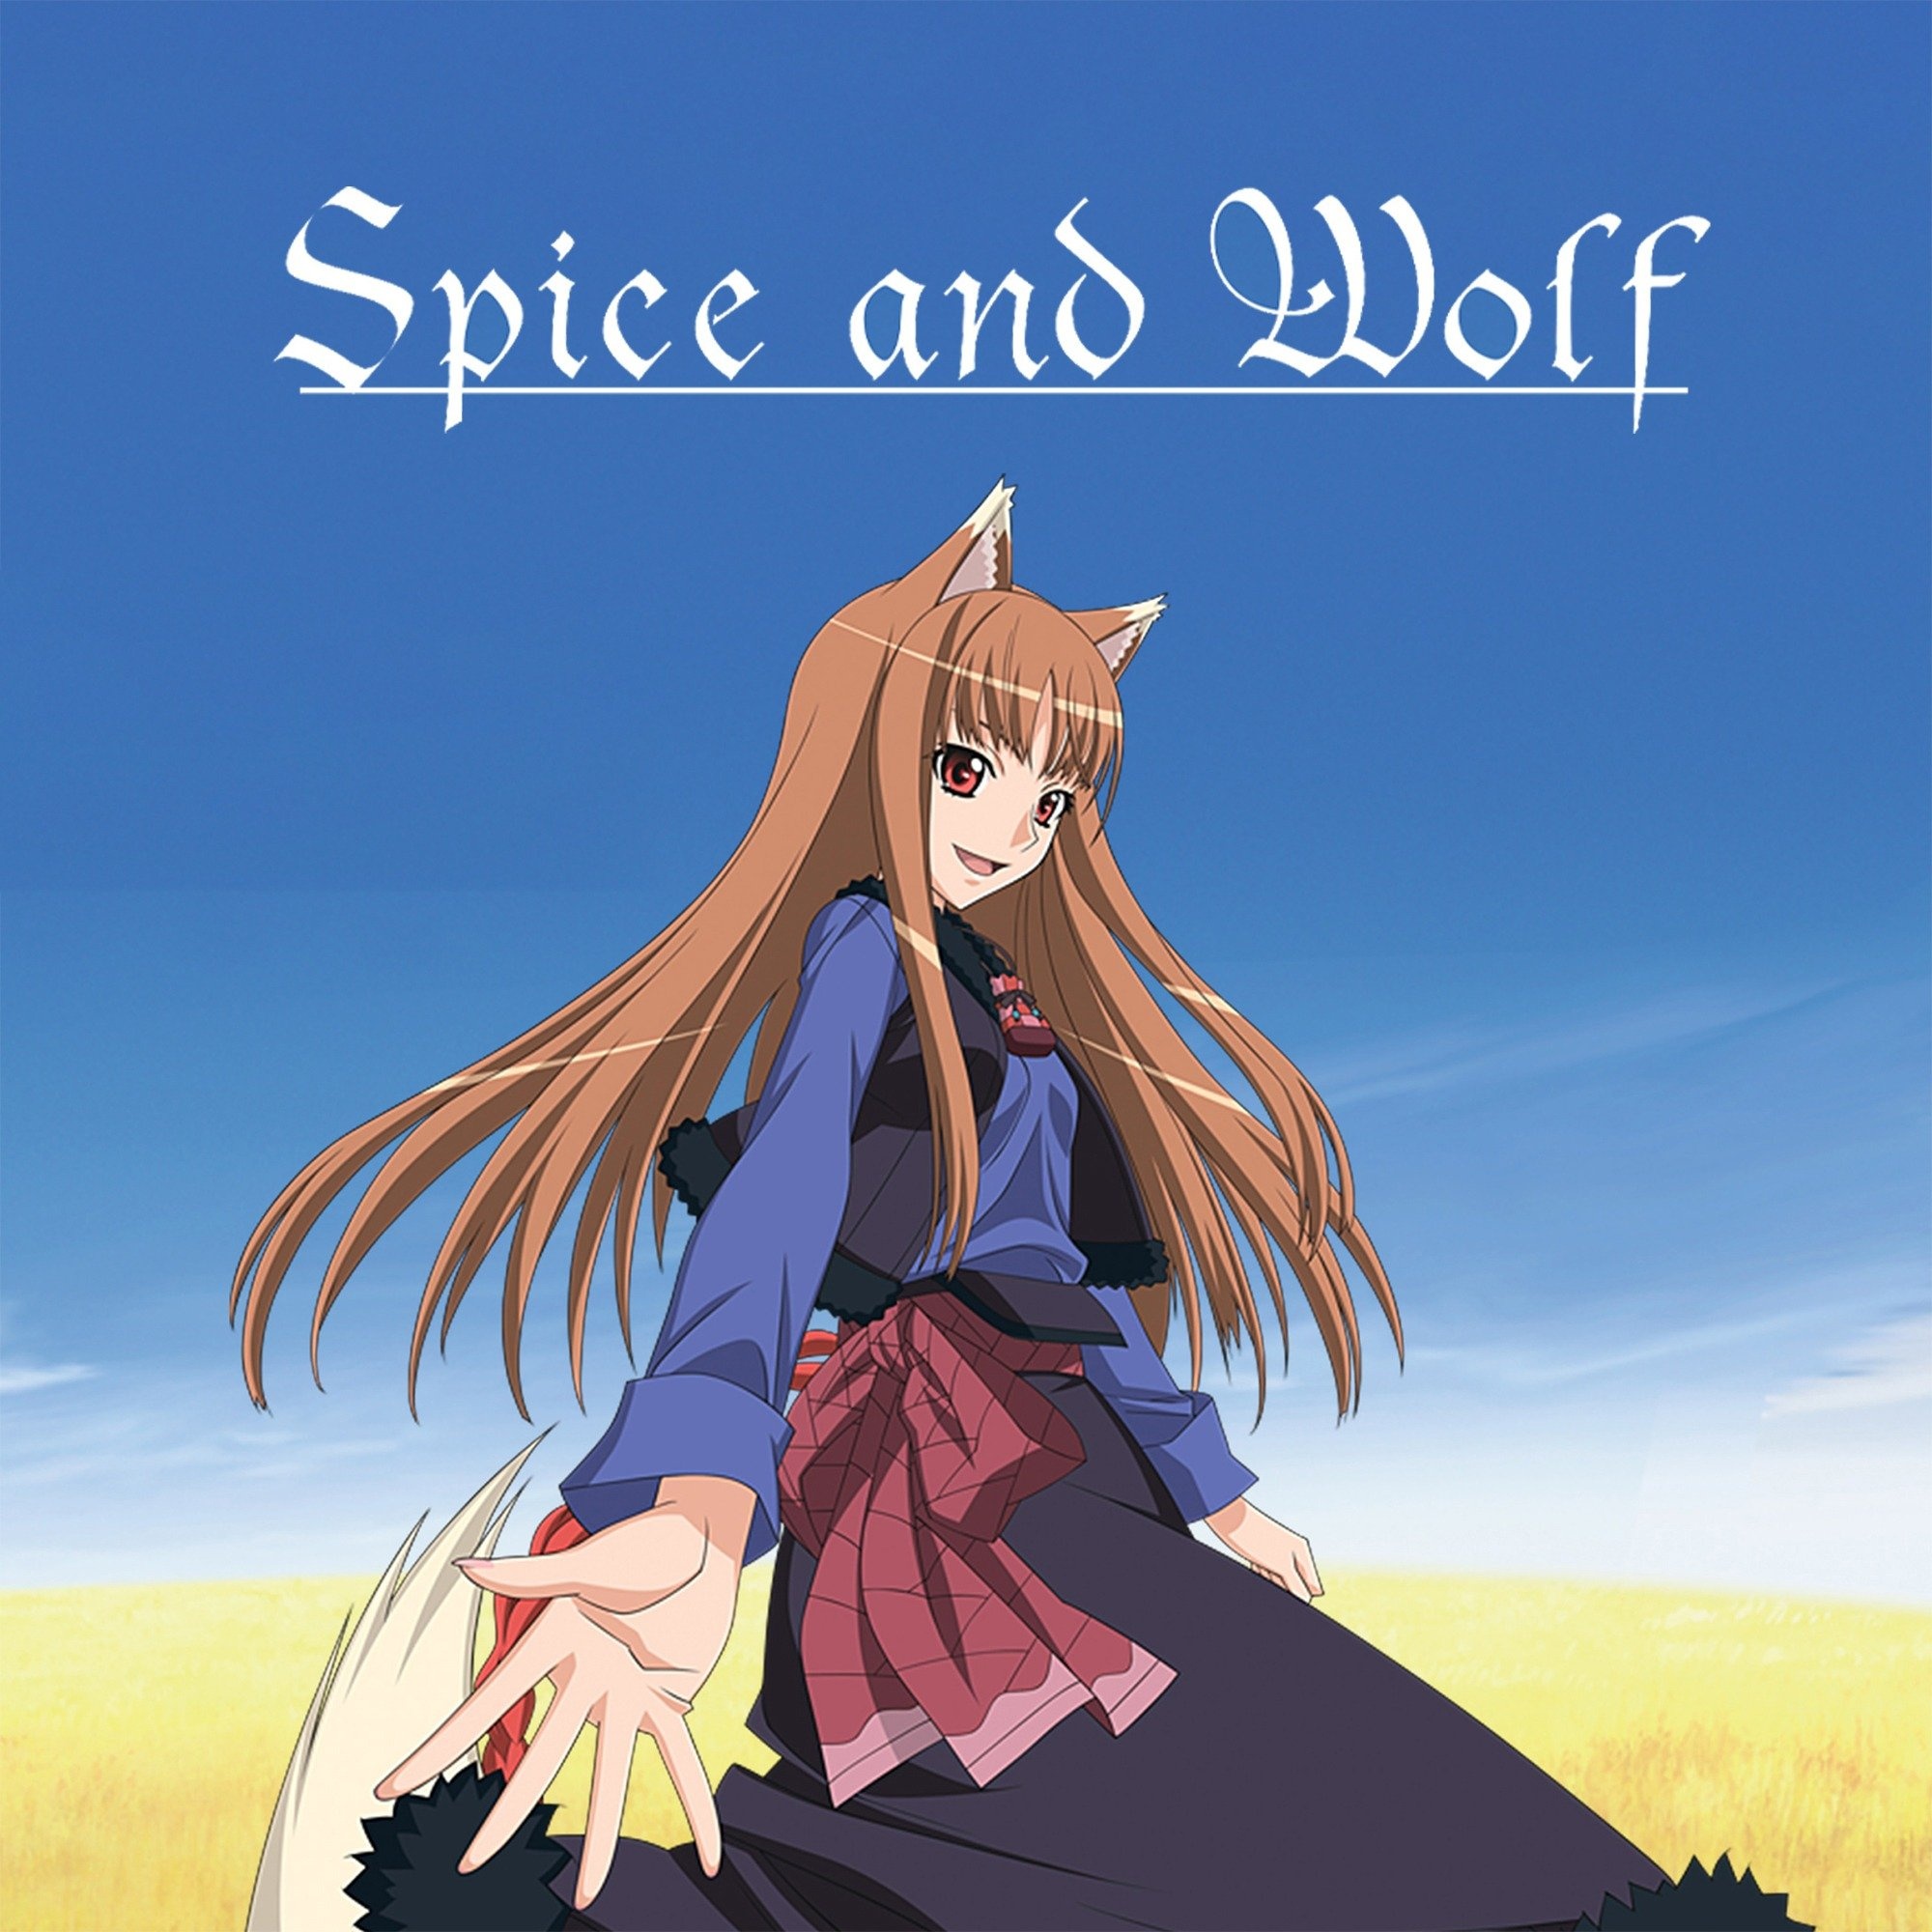 Spice and Wolf (Anime): Plex, Japanese light novel series written by Isuna Hasekura. 2000x2000 HD Wallpaper.